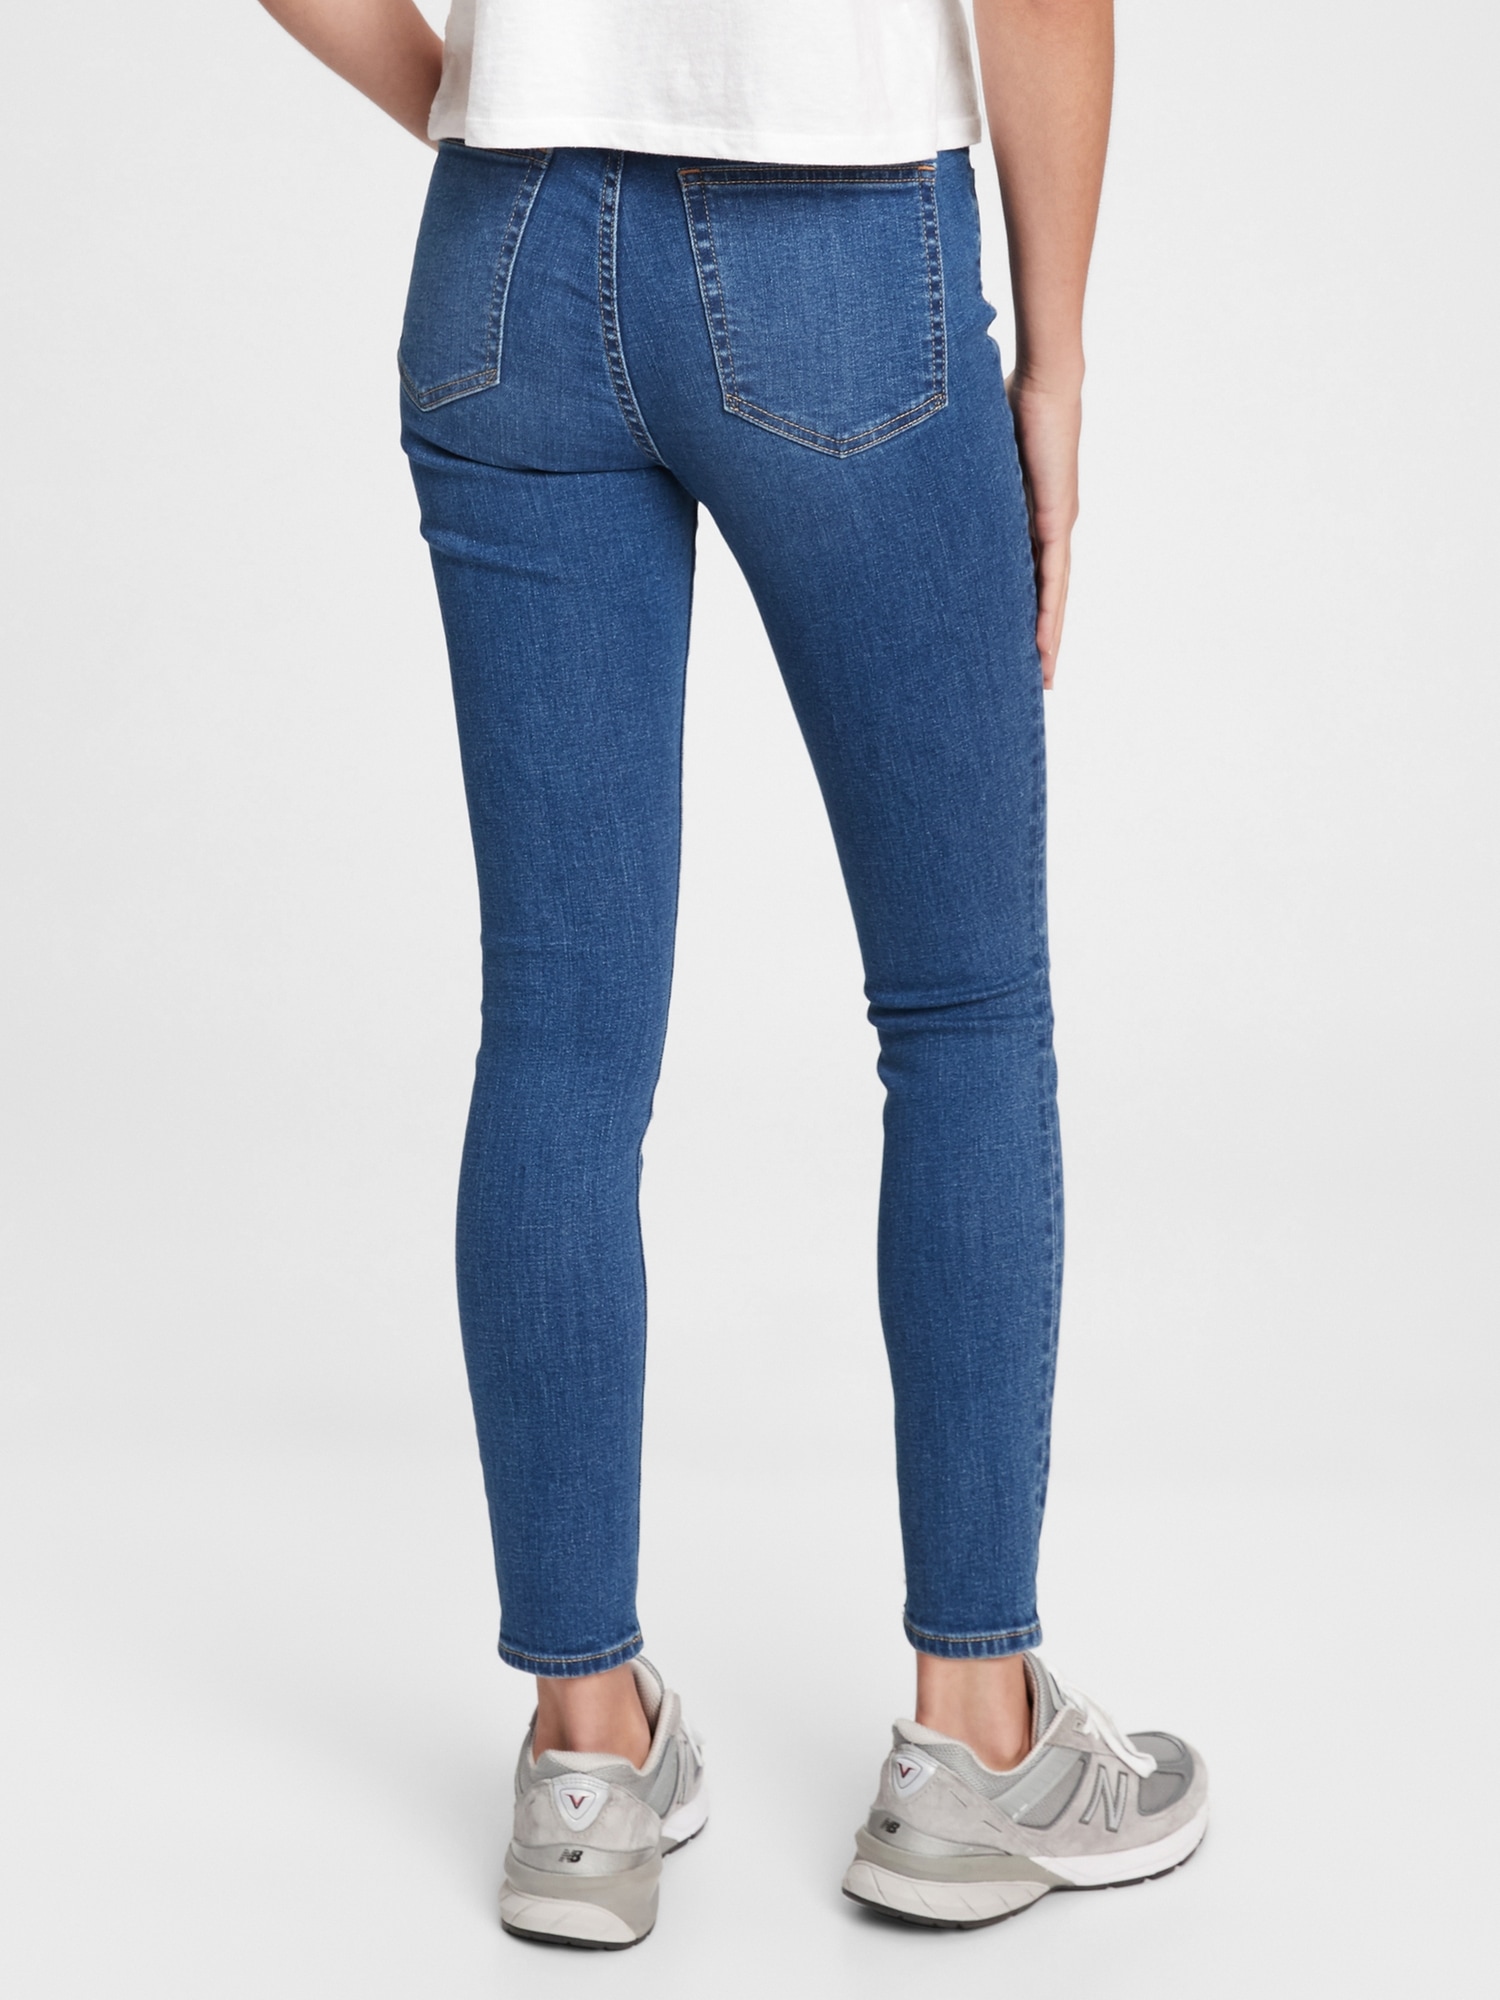 Gen Good High Rise True Skinny Jeans with Washwell | Gap